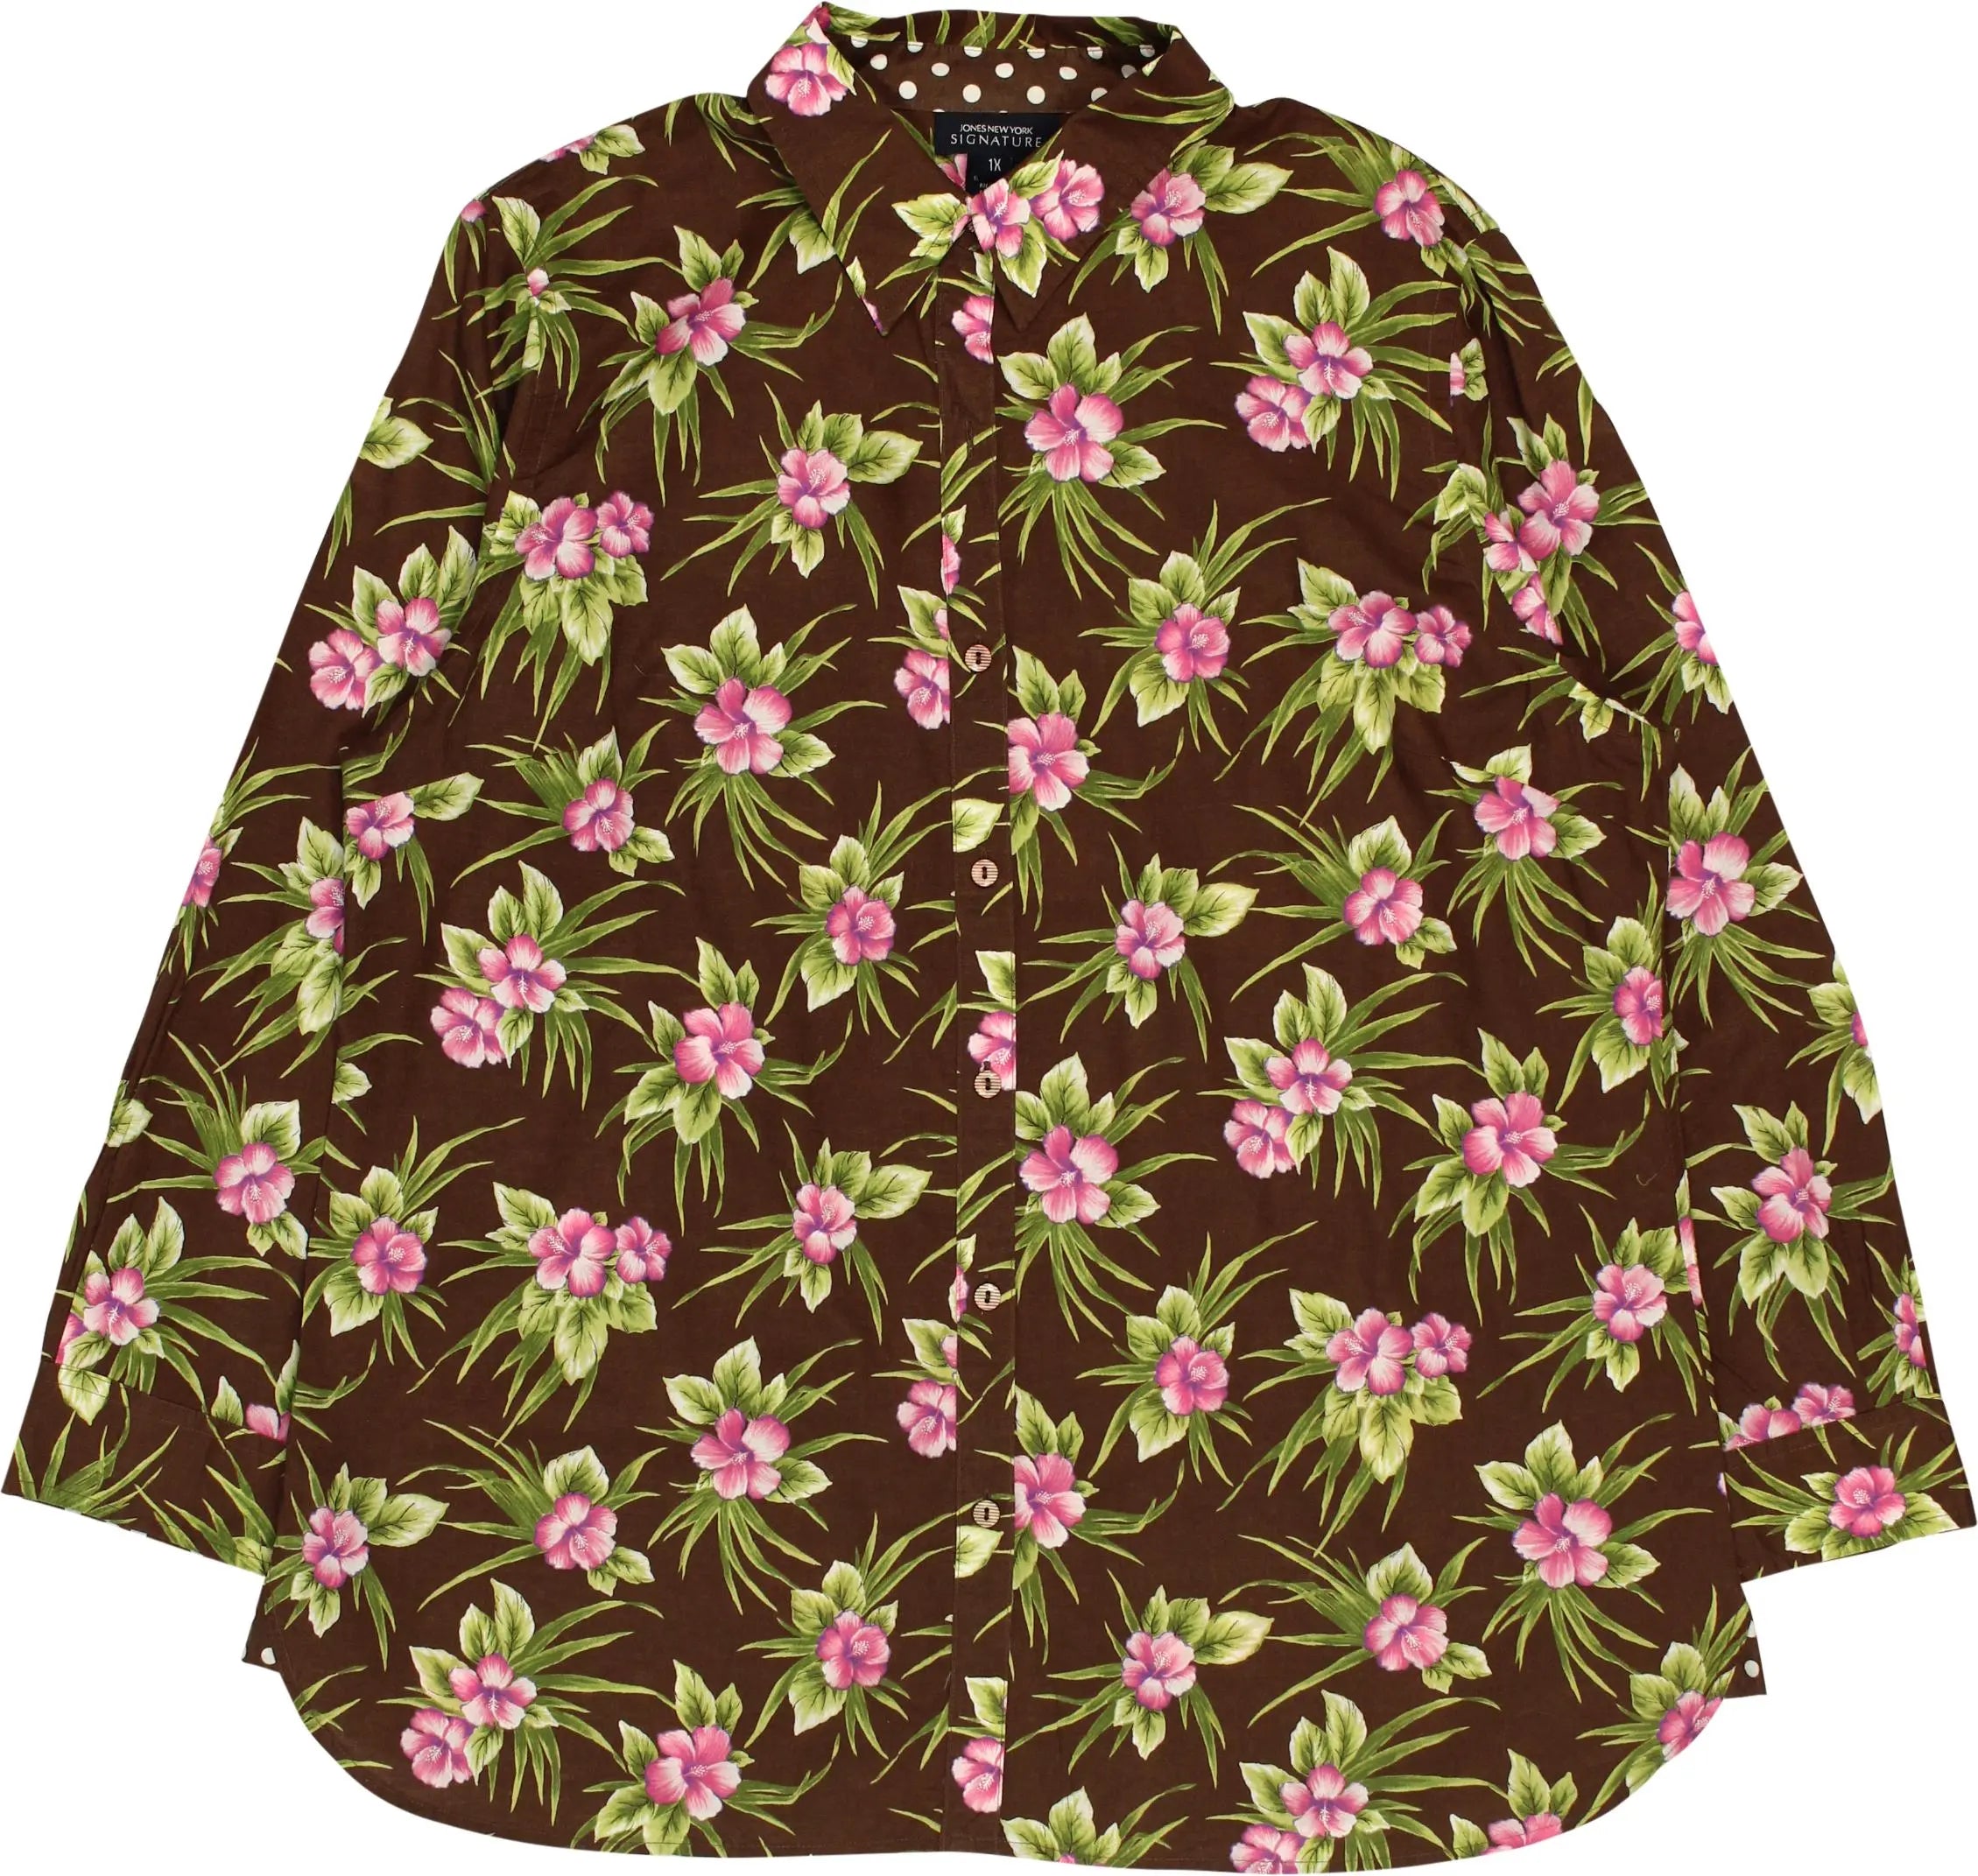 Jones New York - Hawaiian Shirt- ThriftTale.com - Vintage and second handclothing